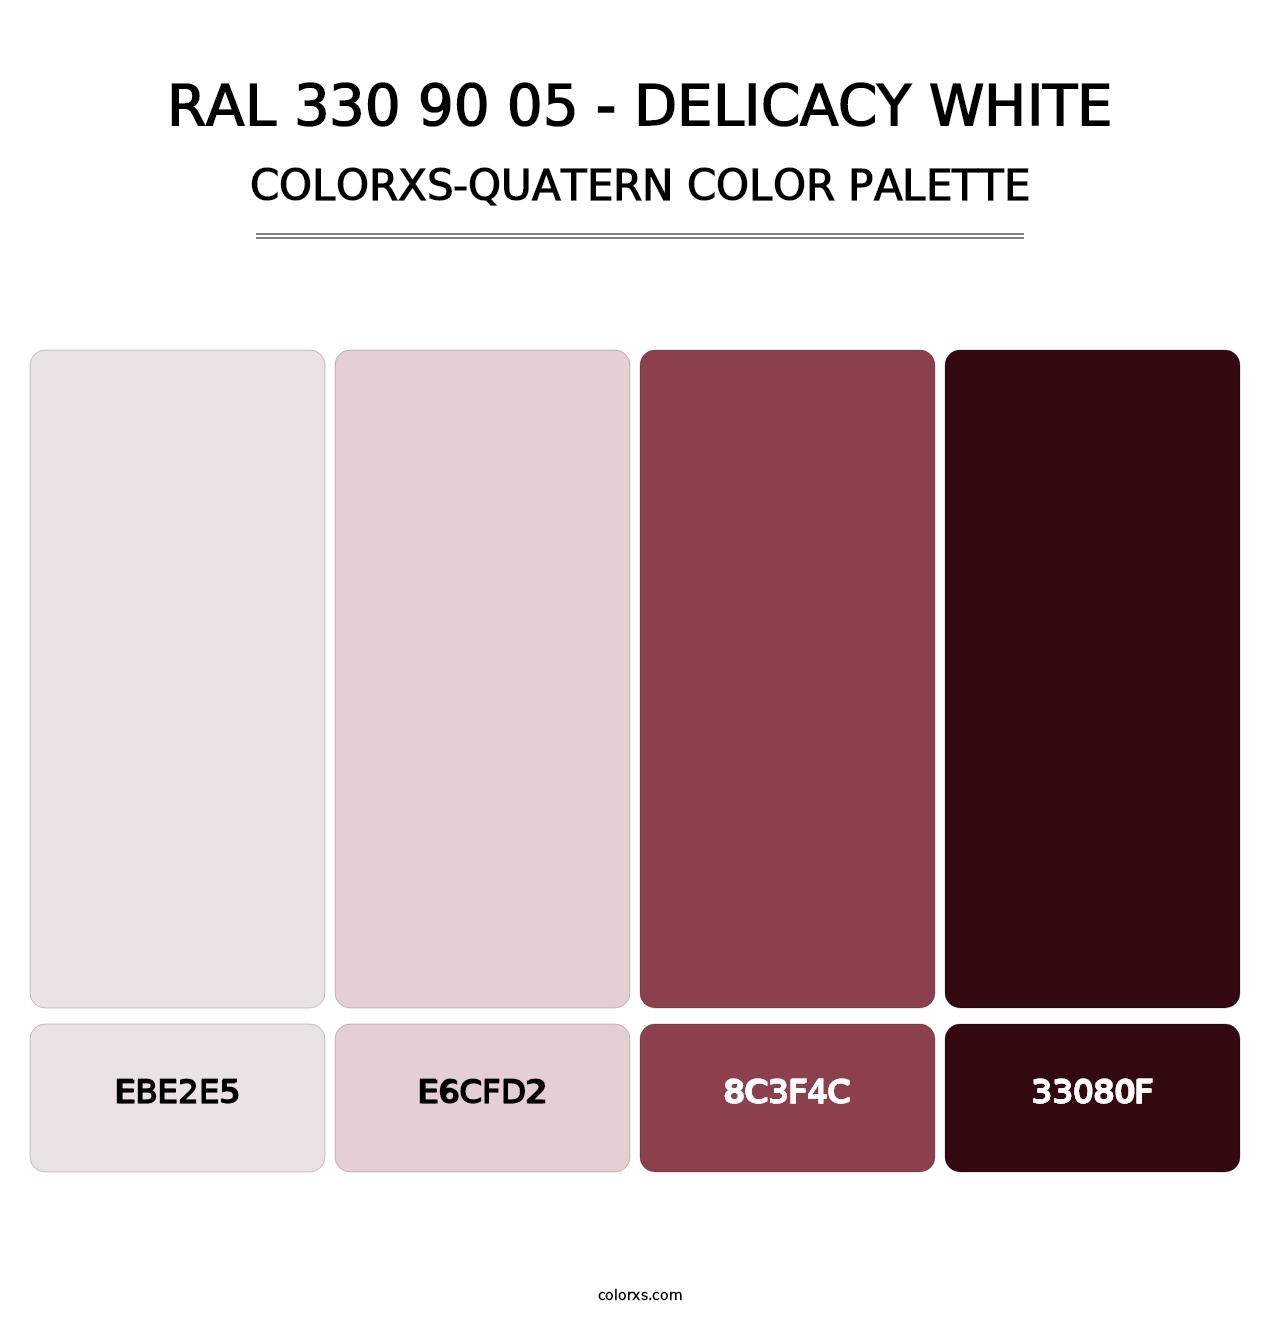 RAL 330 90 05 - Delicacy White - Colorxs Quatern Palette